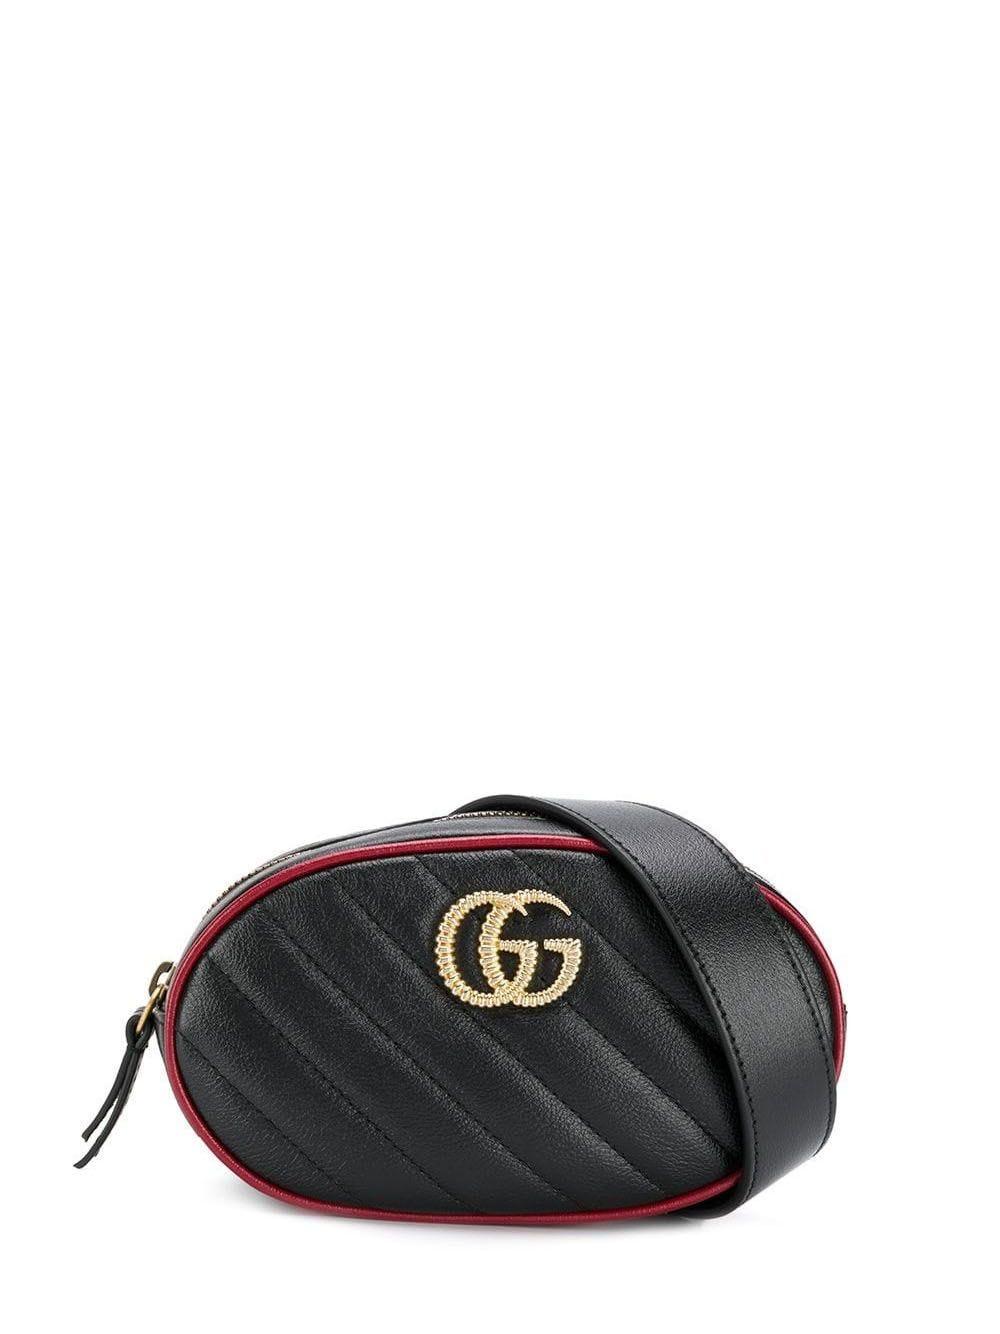 Gucci GG Marmont Matelasse Leather Belt Bag Black Small